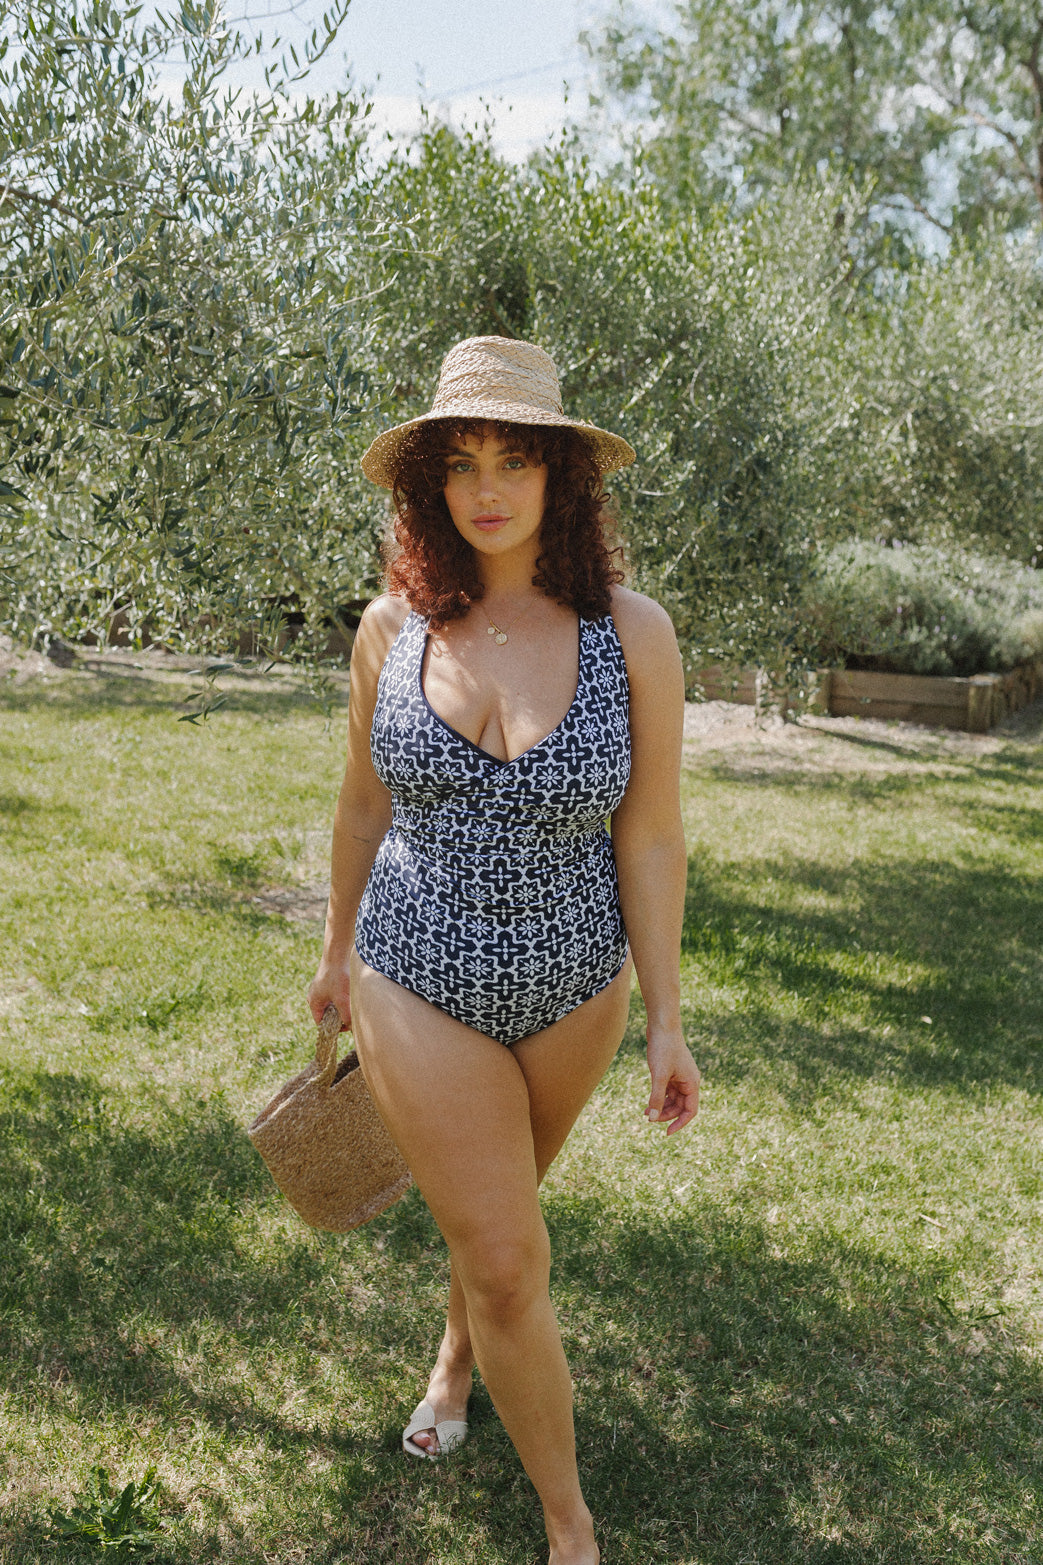 Woman walks through garden wearing a blue and white geometric bikini set.